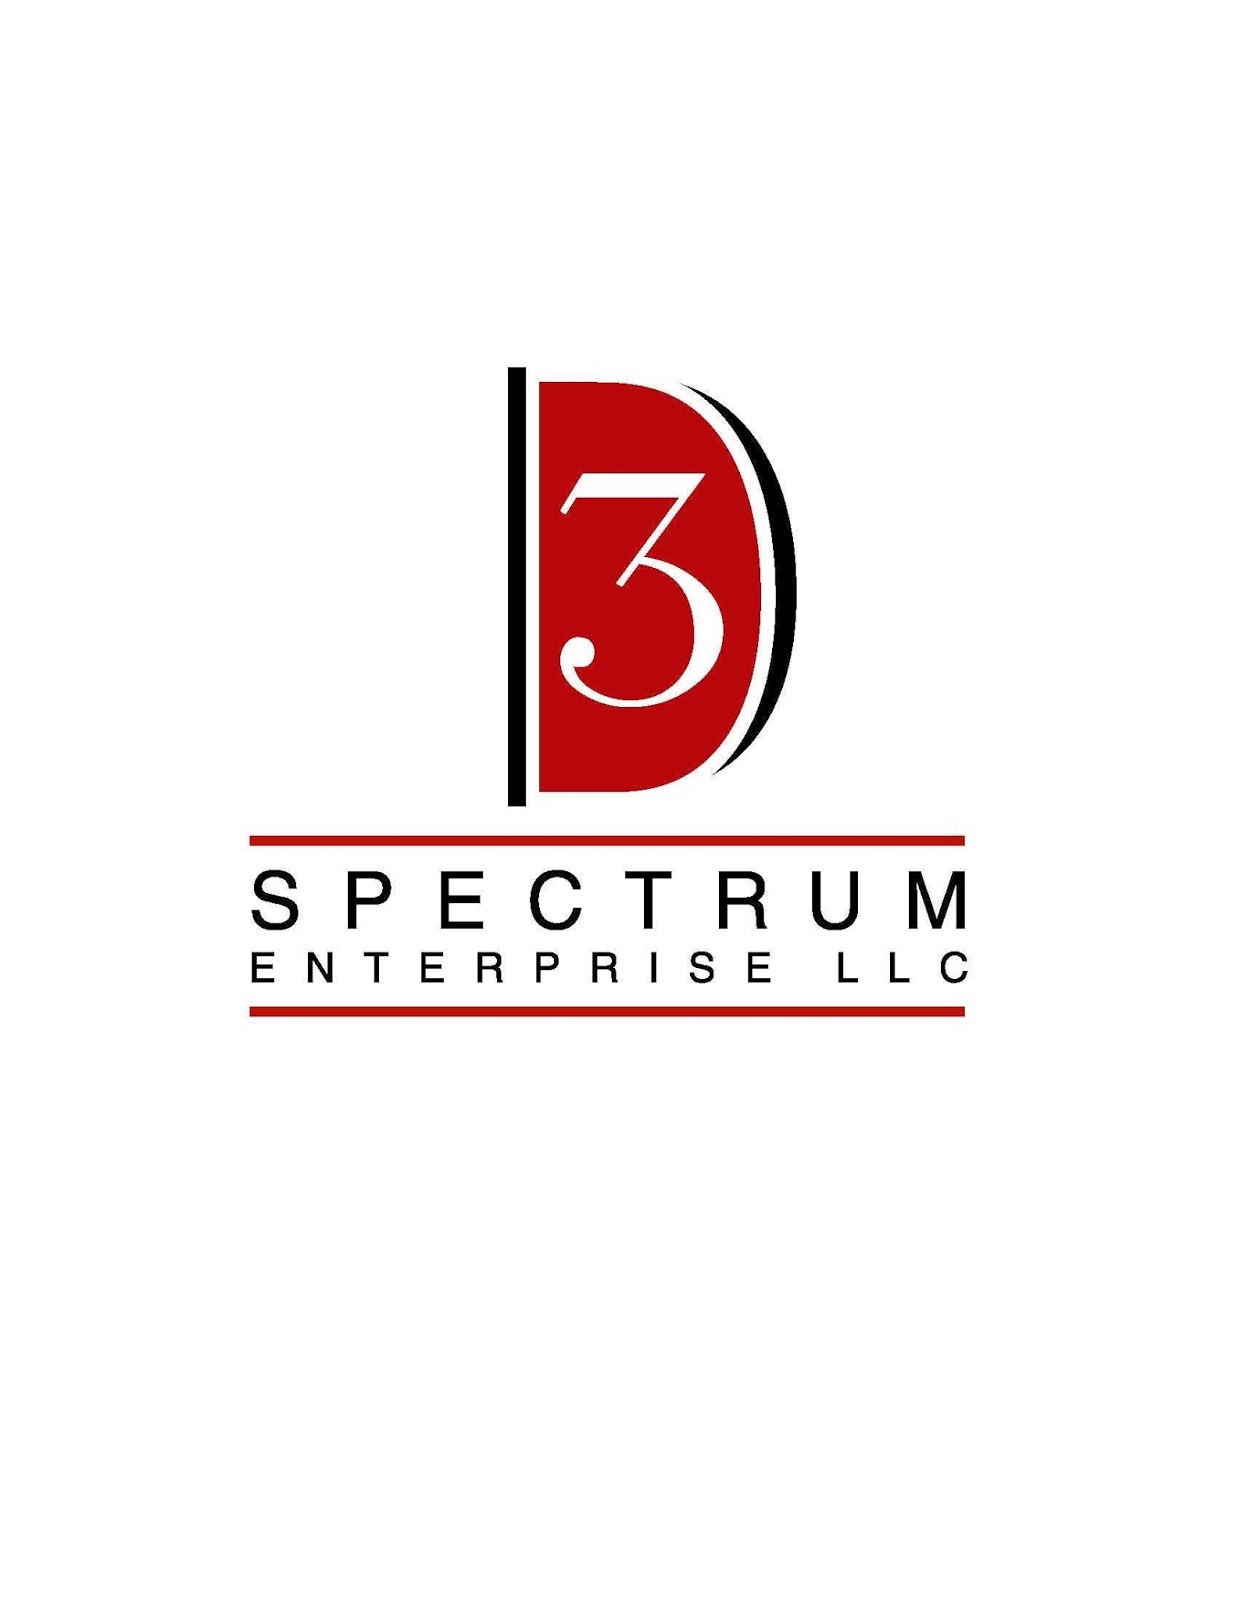 Photo of 3D Spectrum Enterprise LLC in New York City, New York, United States - 1 Picture of Point of interest, Establishment